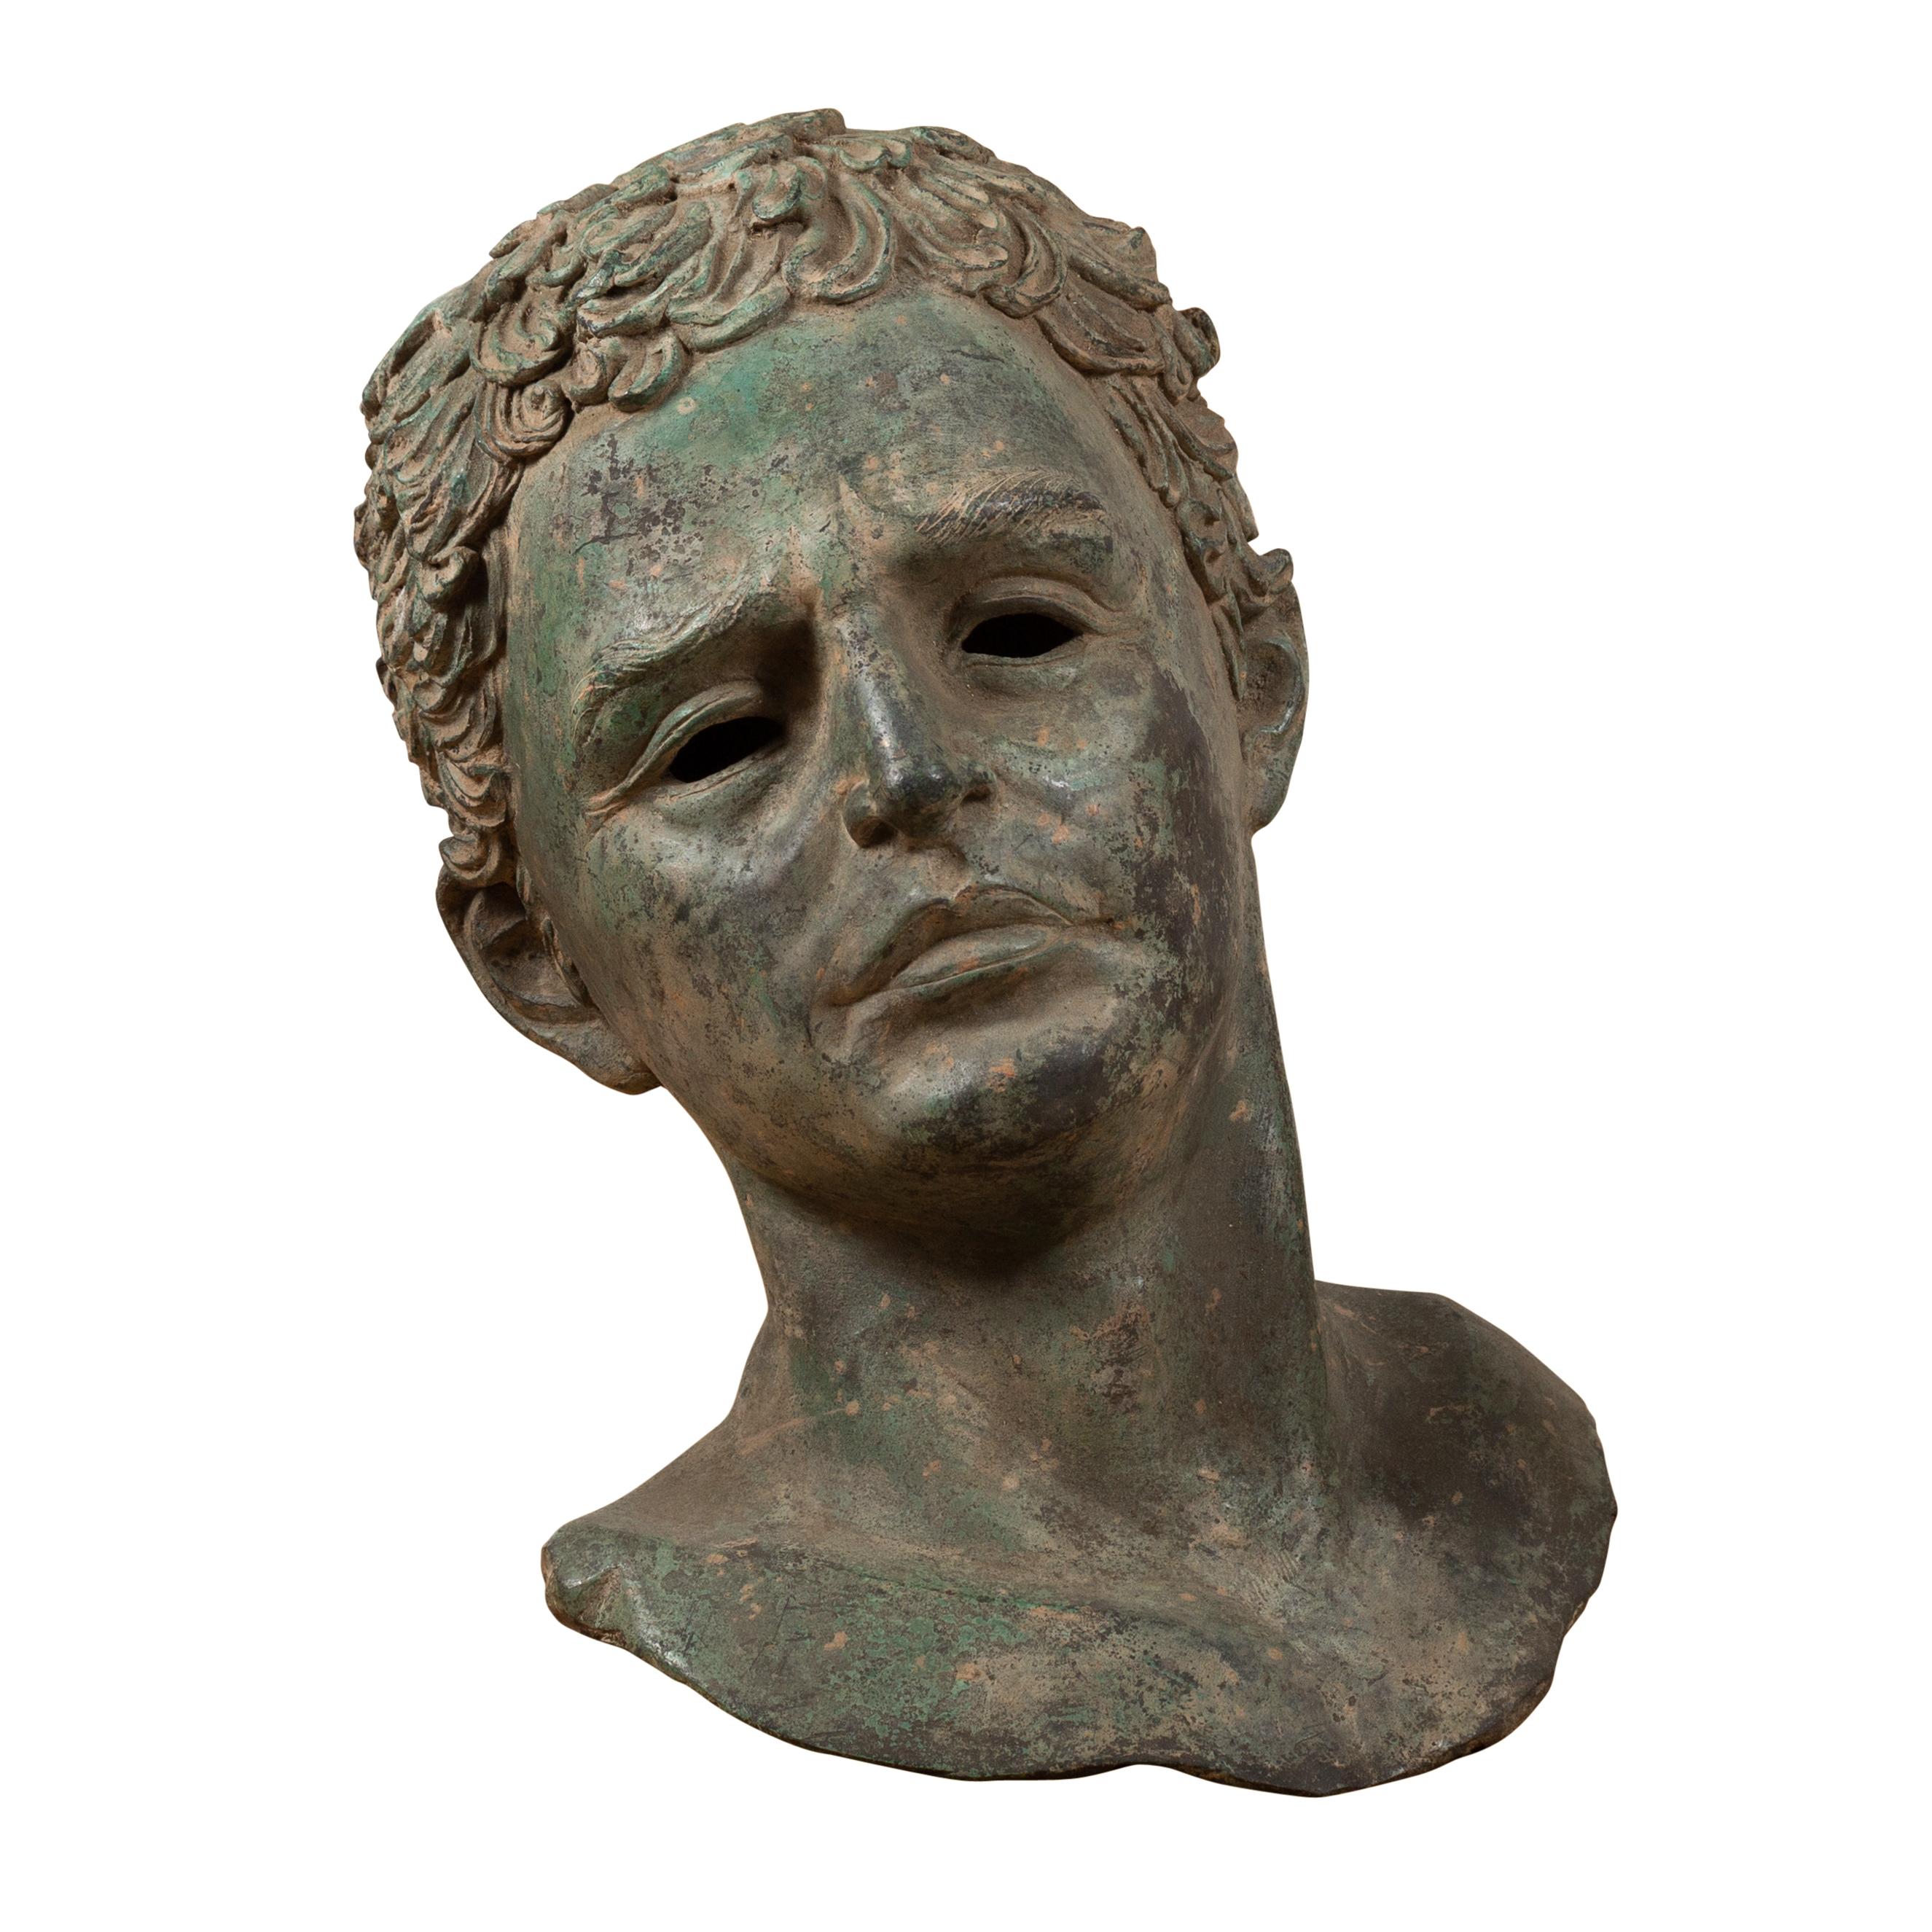 Vintage Thai Bronze Classical Bust of a Roman Philosopher with Verdigris Patina